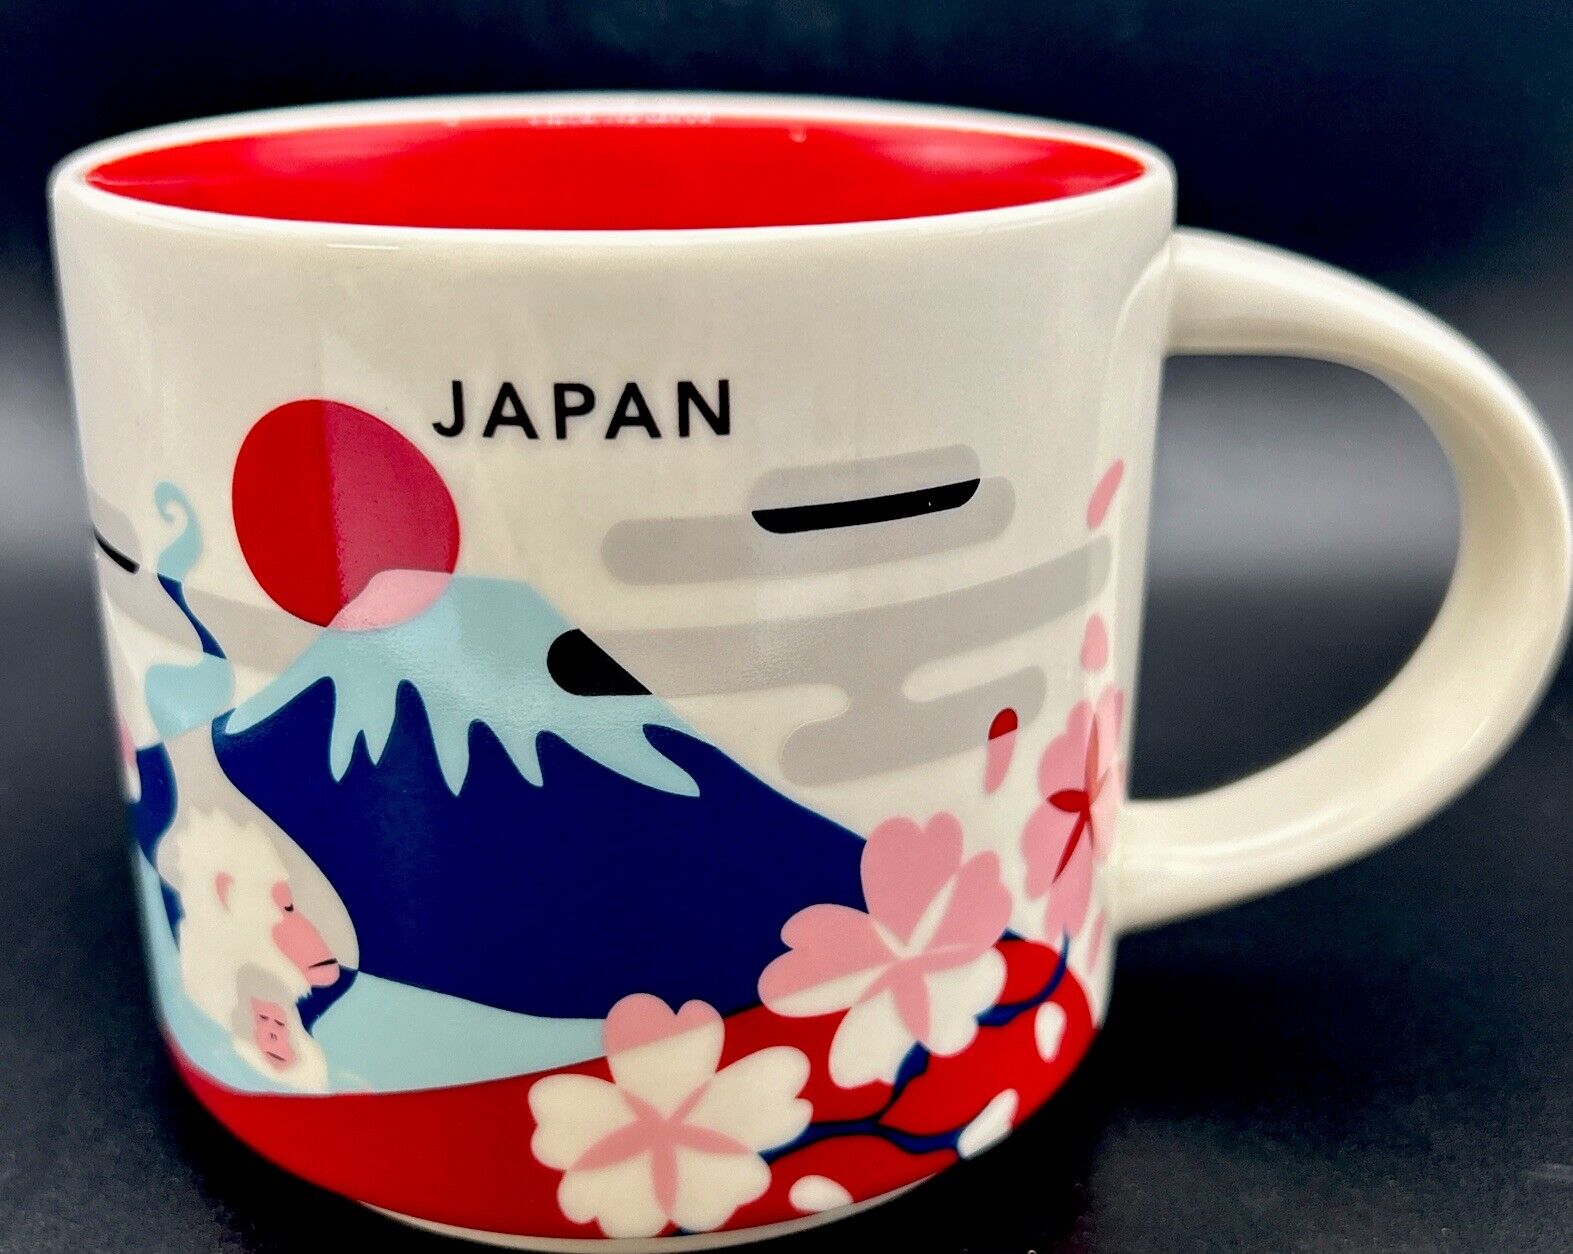 Starbucks Japan 2018 Coffee Mug Tea Cup 14 oz You Are Here Collection Stoneware